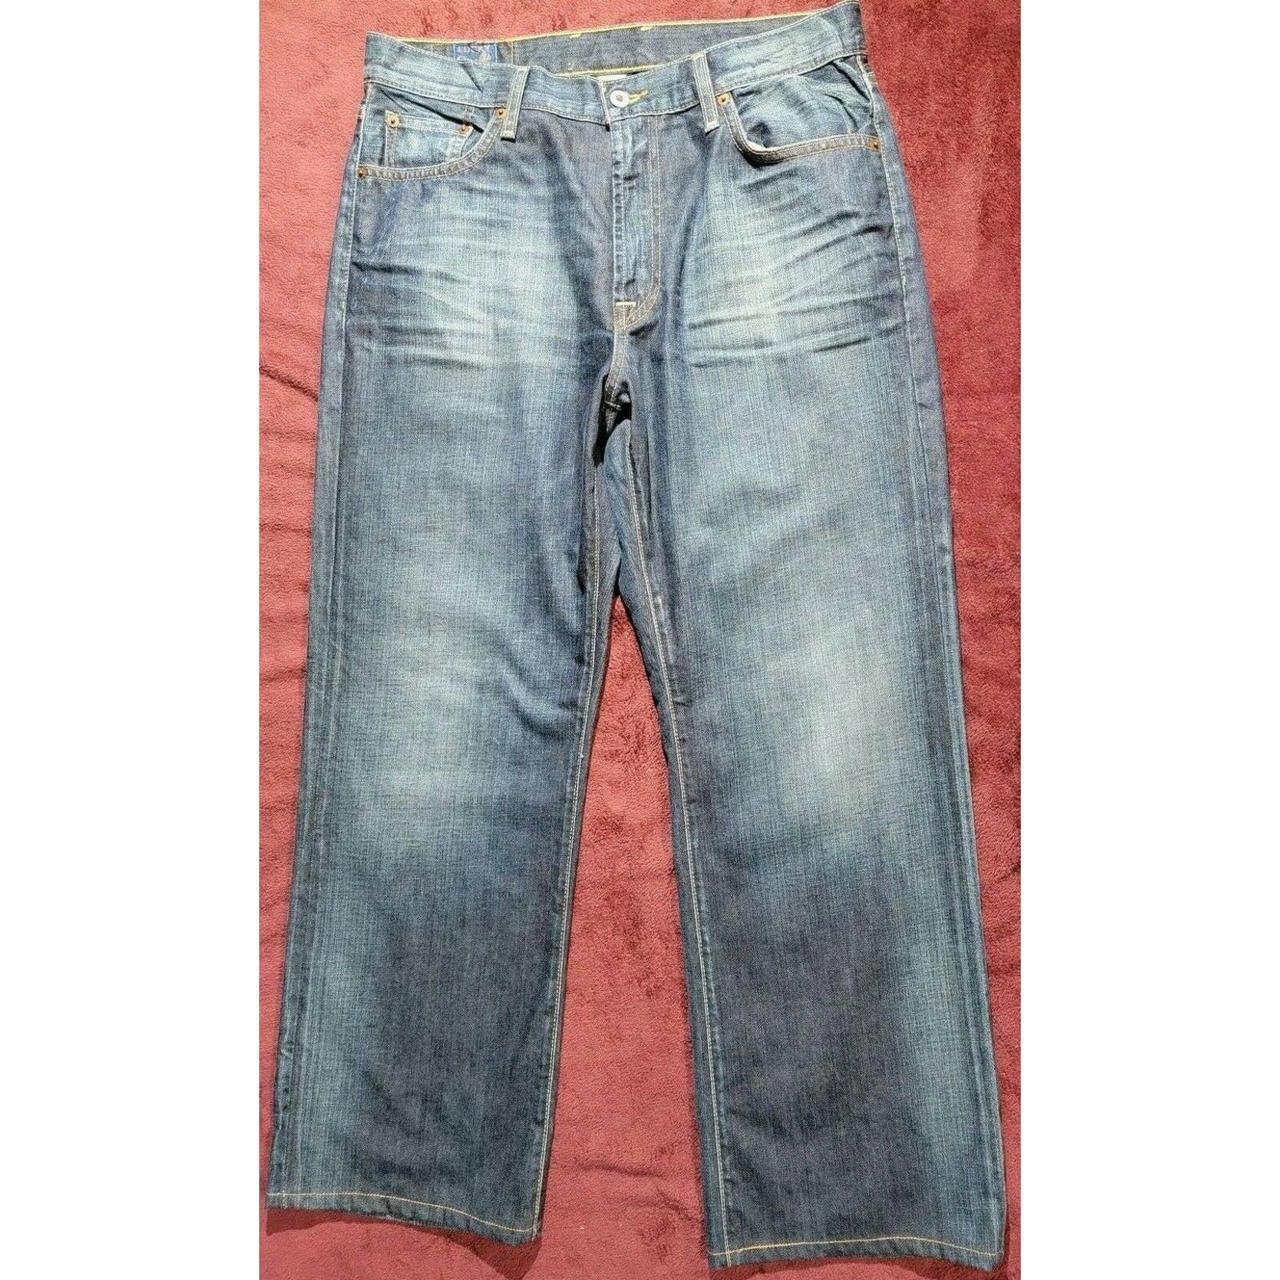 Vintage Lucky Brand Jeans Made in USA Gene Montesano - Depop